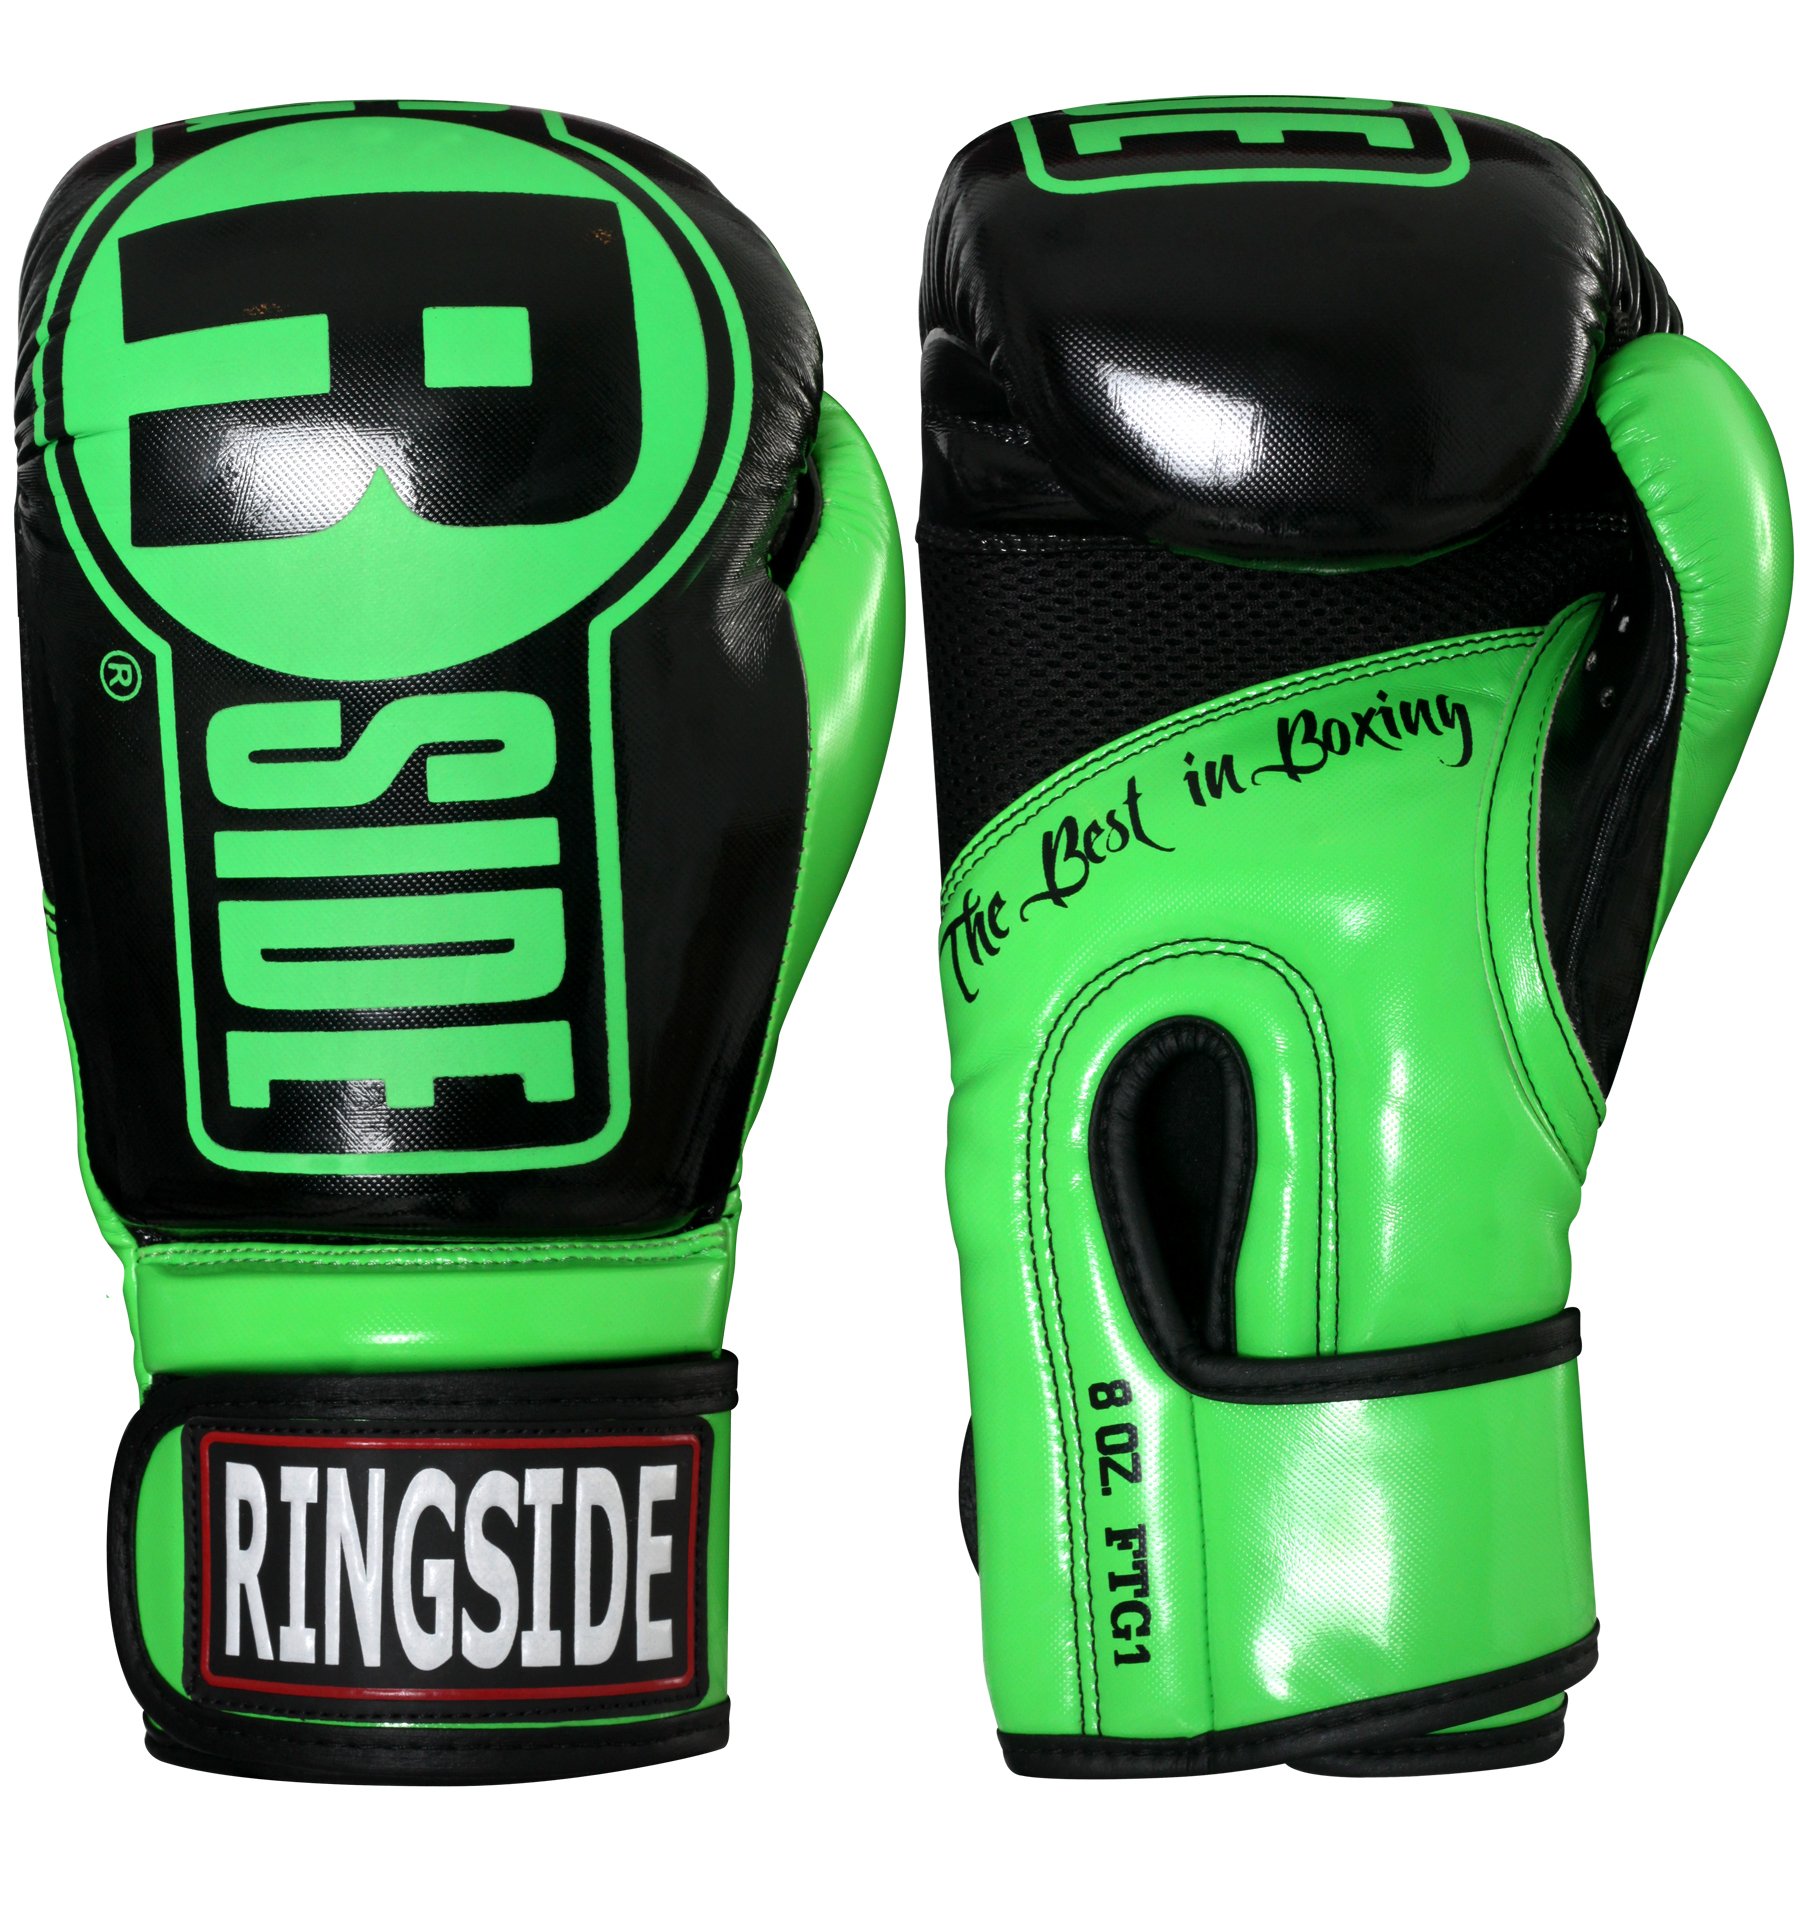 Ringside Apex Boxing Kickboxing Muay Thai Training Gloves Gel Sparring Punching Bag Mitts